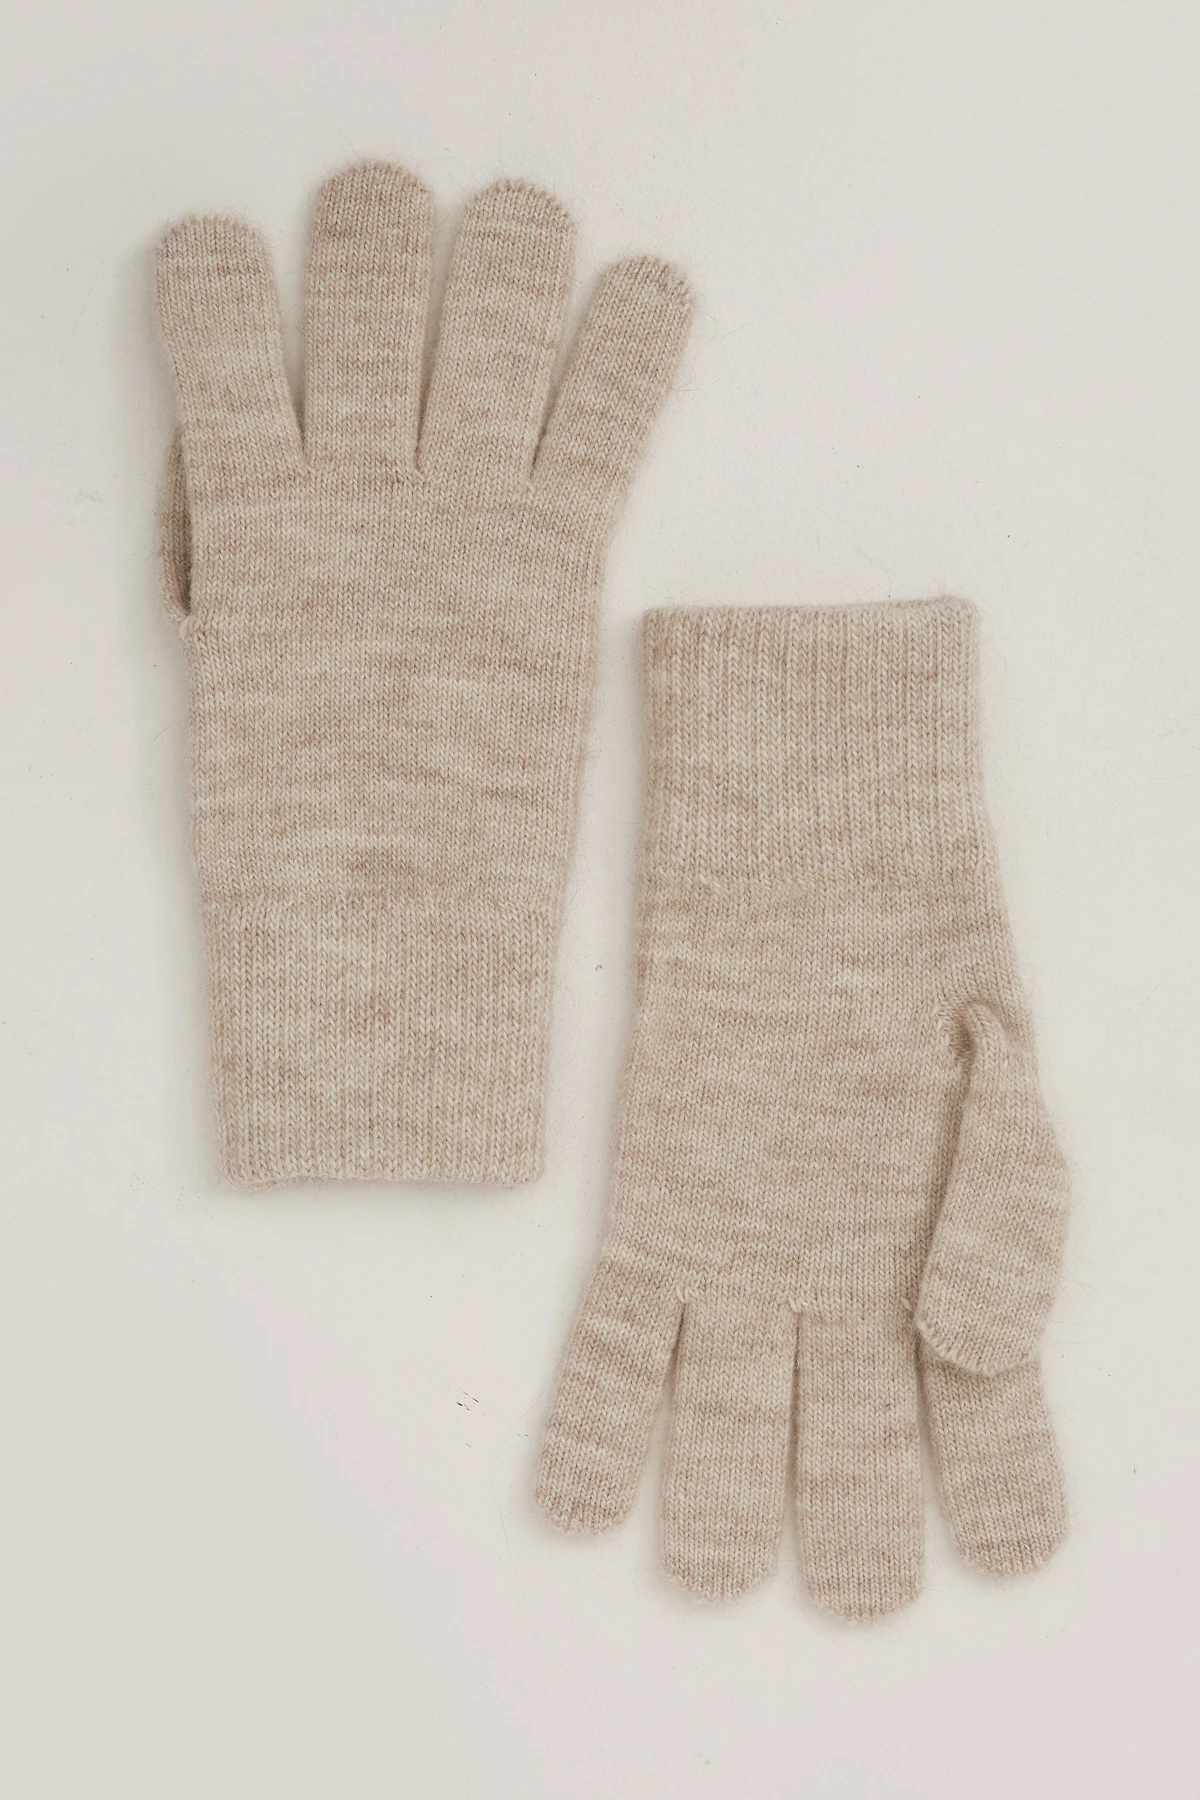 Knitted woolen light beige gloves, photo 1